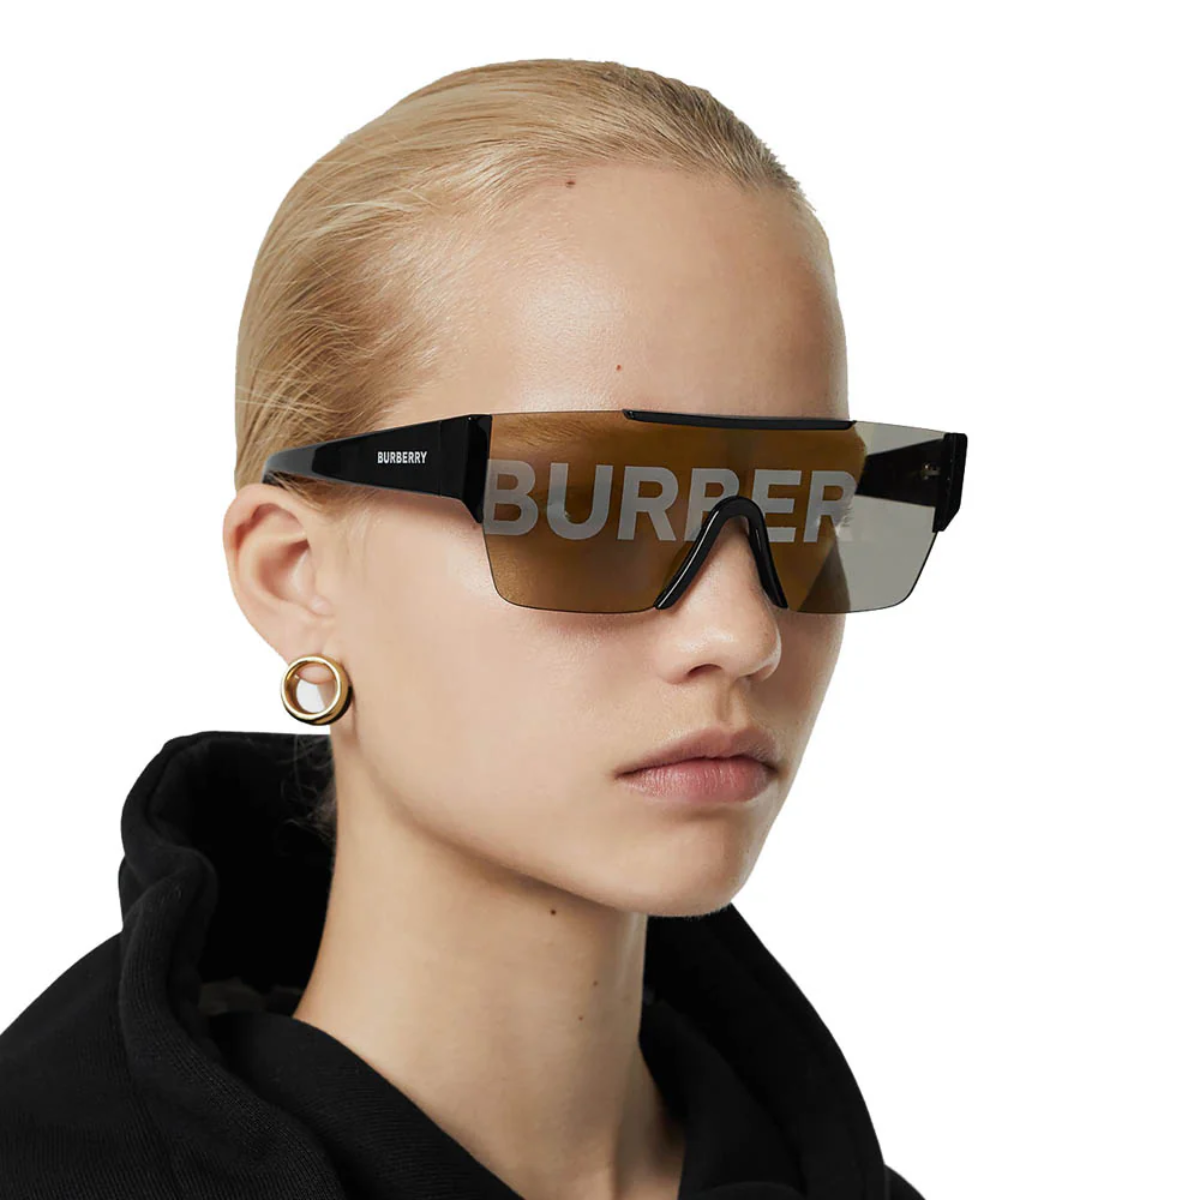 "Women Wearing Burberry UV Protection sunglass at Optorium"